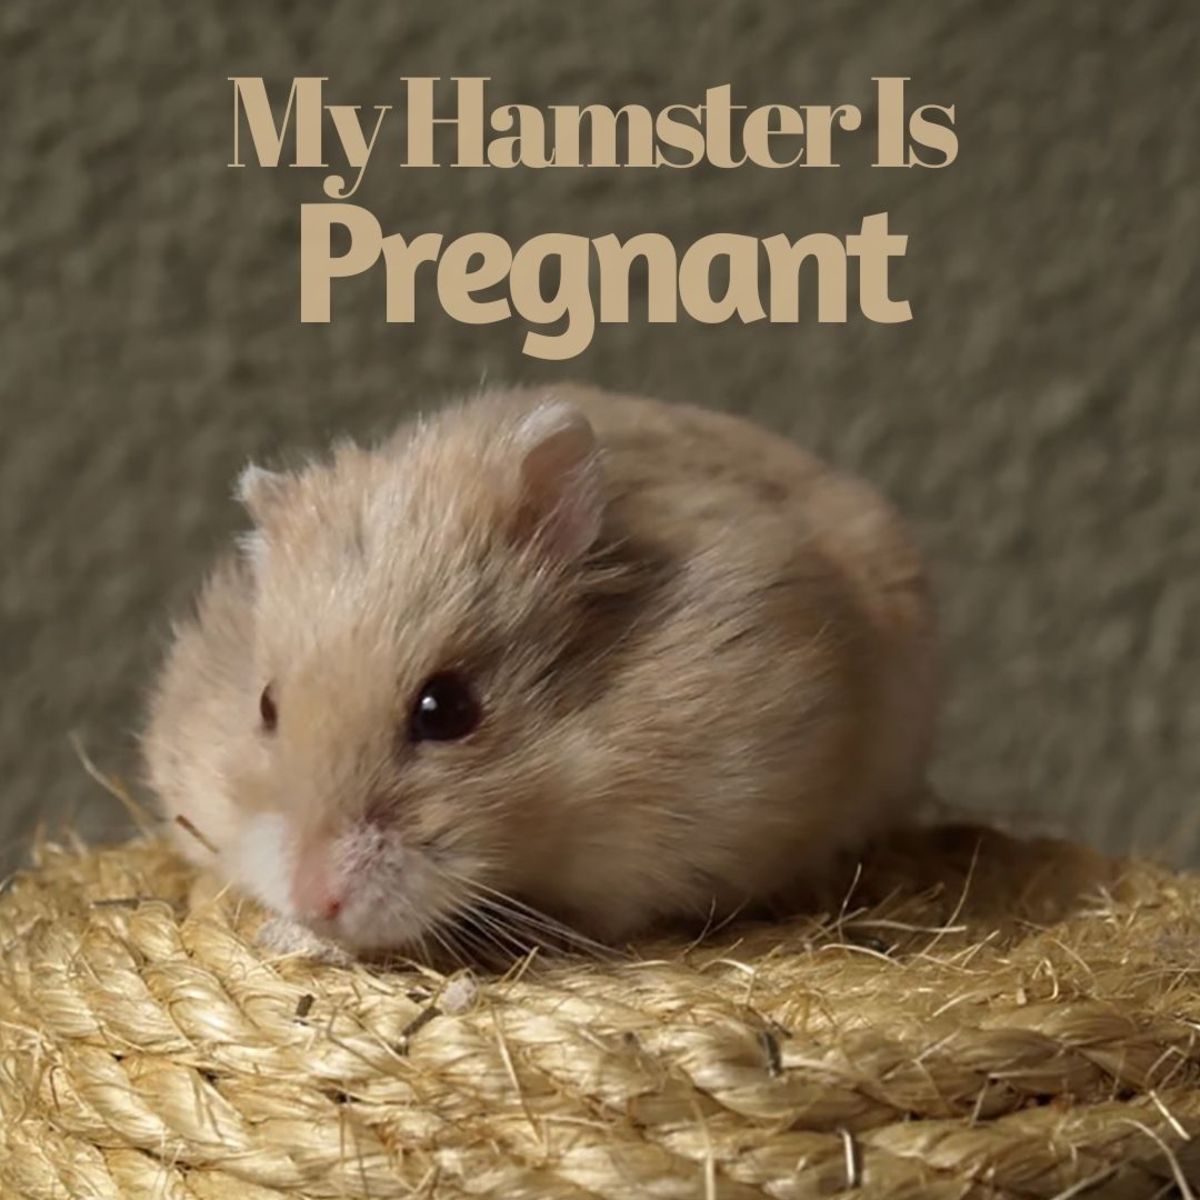 Are you prepared for hamster pregnancy?